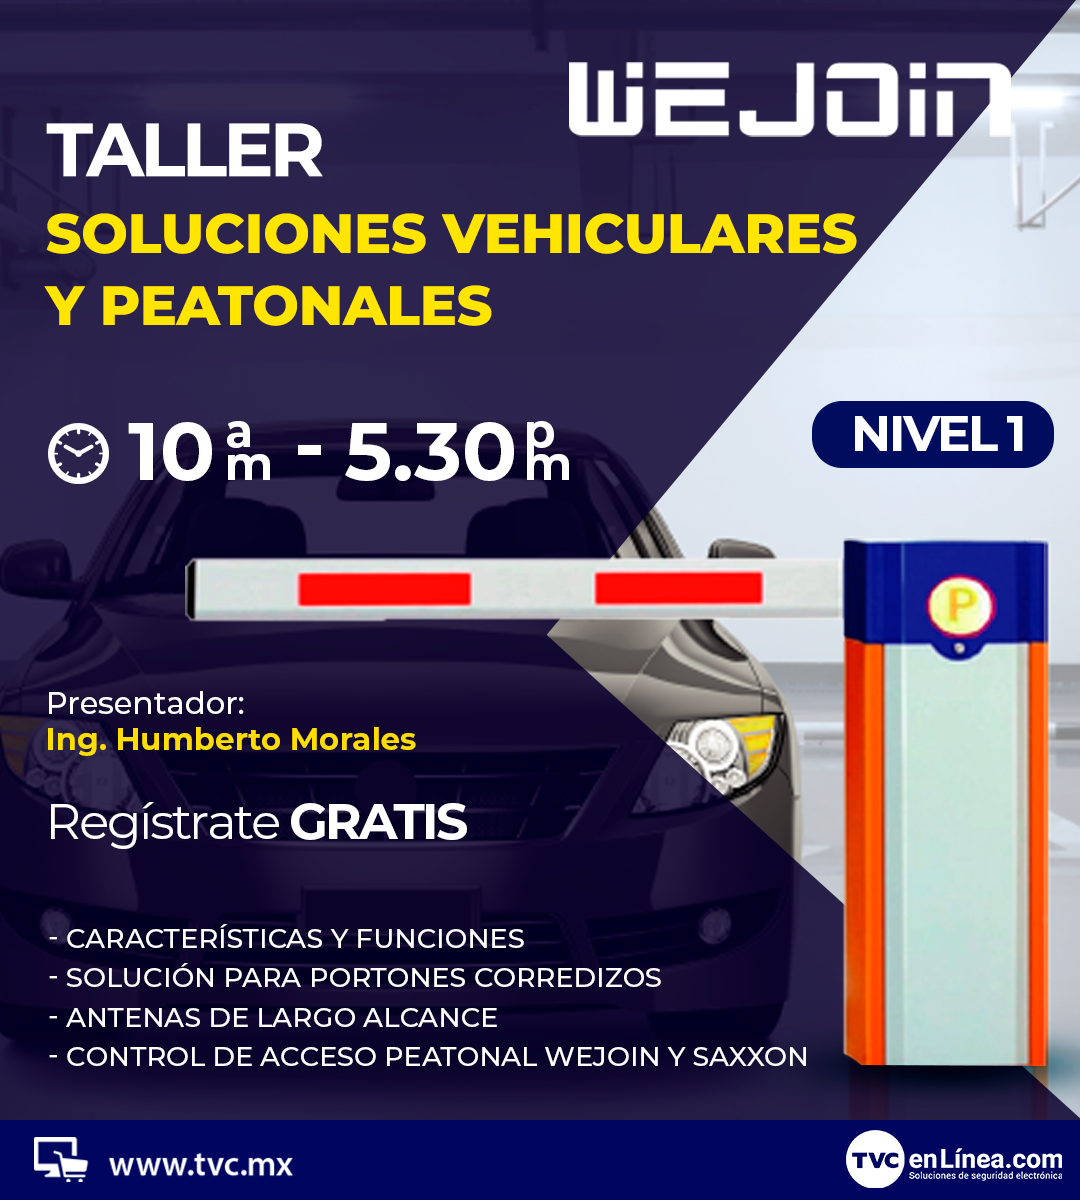 WEJOIN: Taller de Soluciones Vehiculares y Peatonales